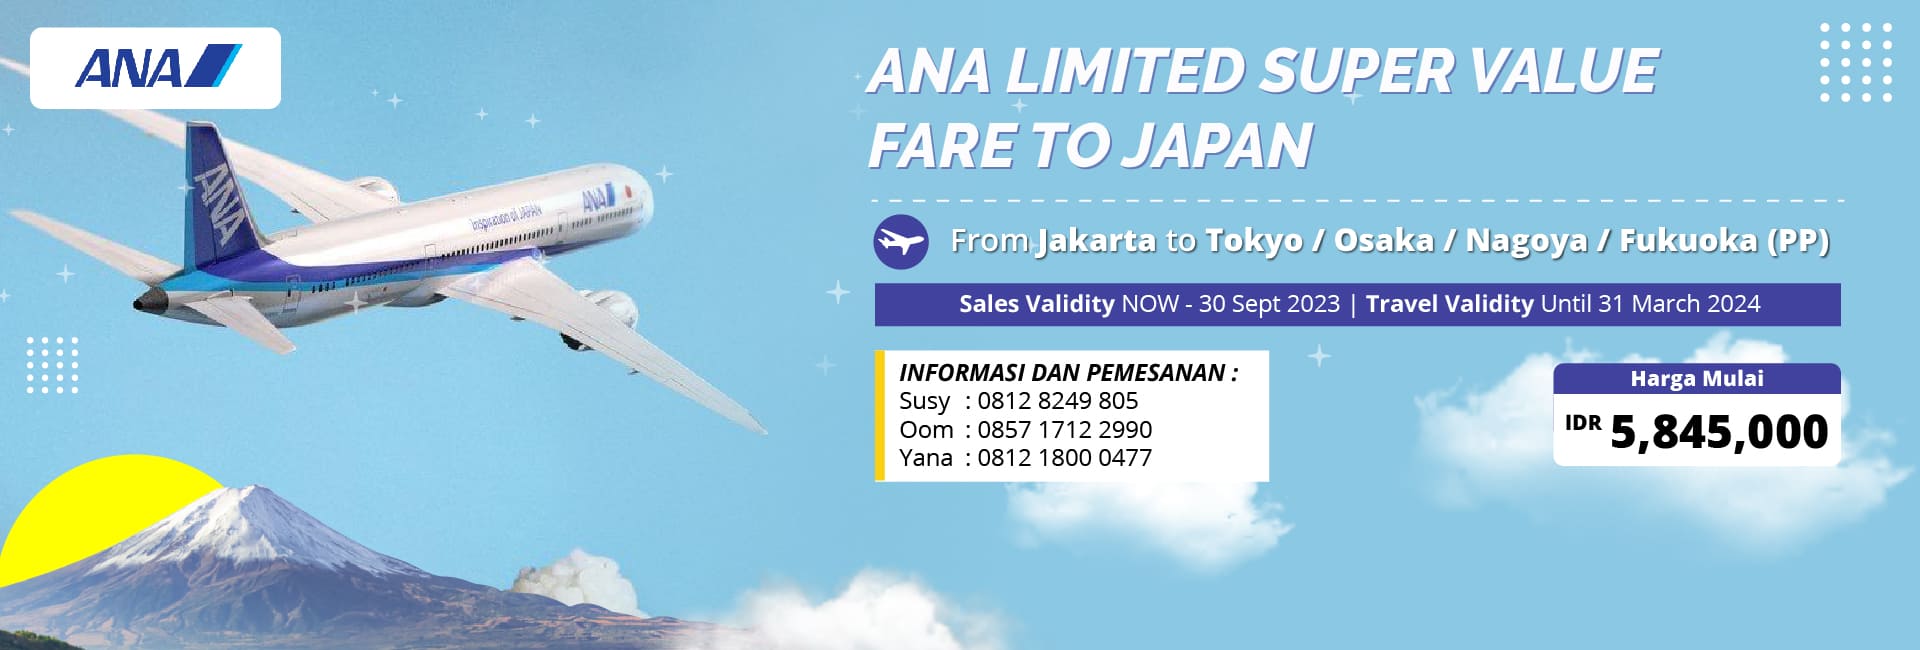 Promo ANA Airways Jakarta Japan